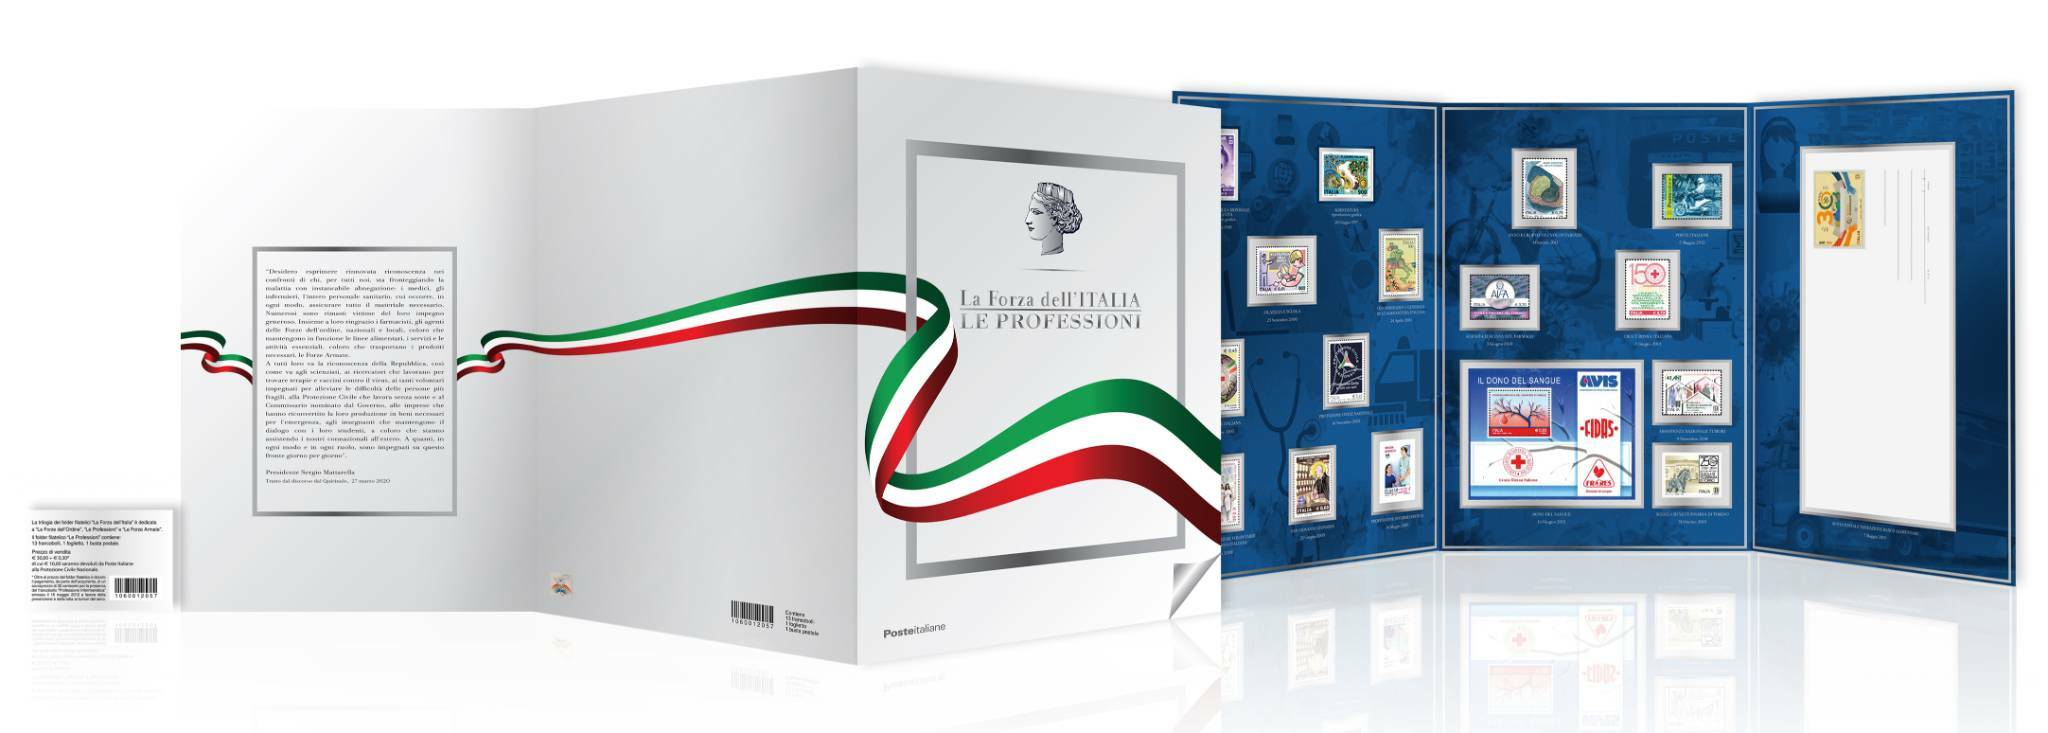 riviera24 - Poste Italiane folder